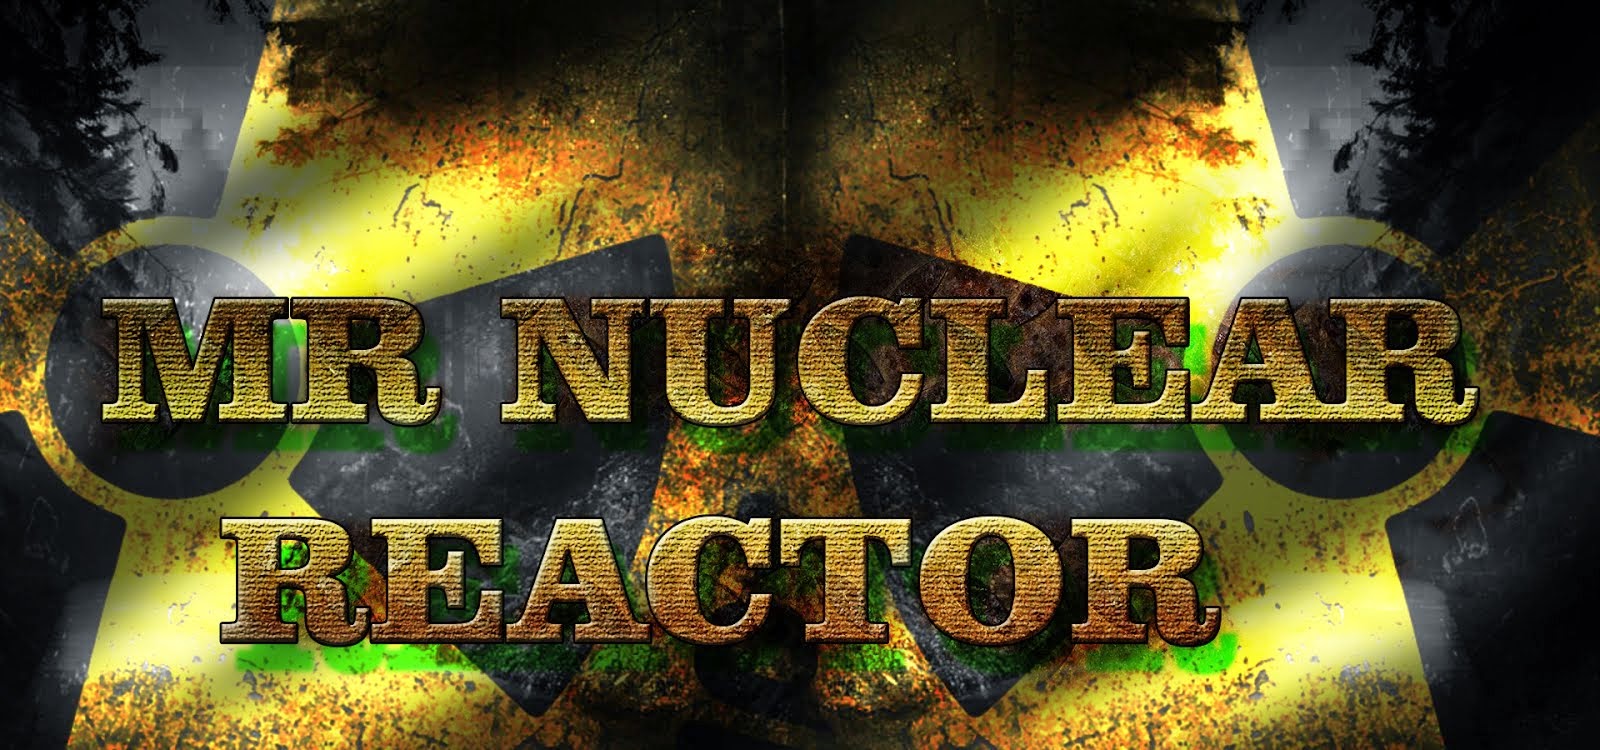 Mr Nuclear Reactor